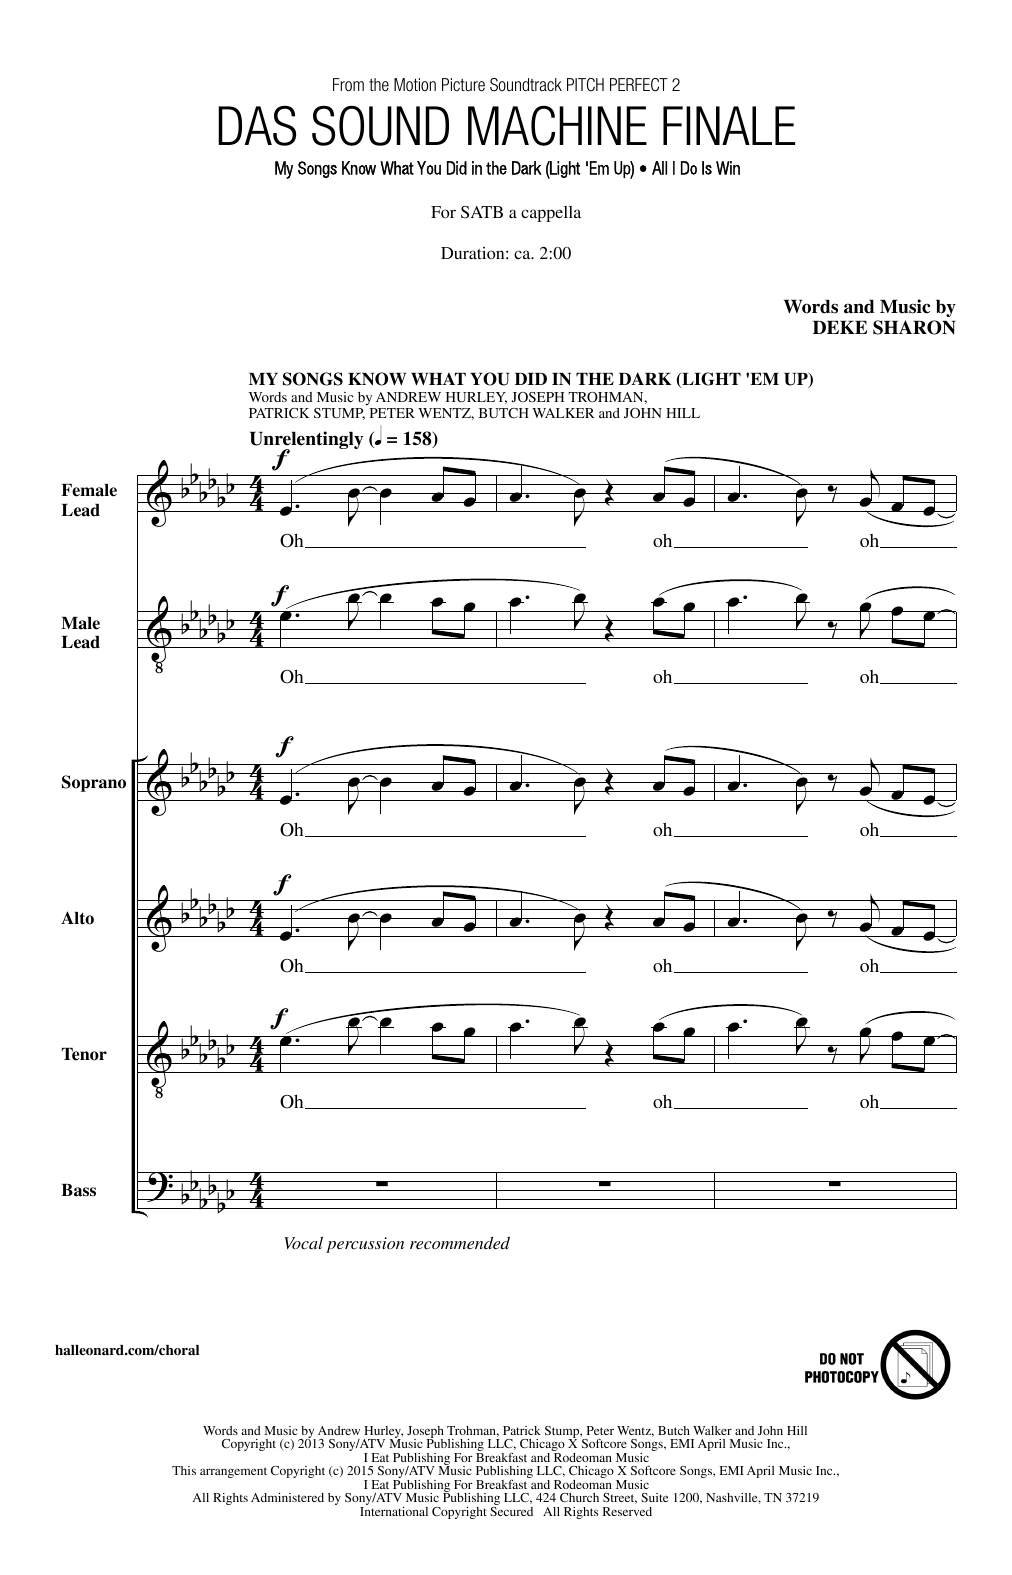 Deke Sharon Das Sound Machine Finale sheet music notes and chords arranged for SATB Choir